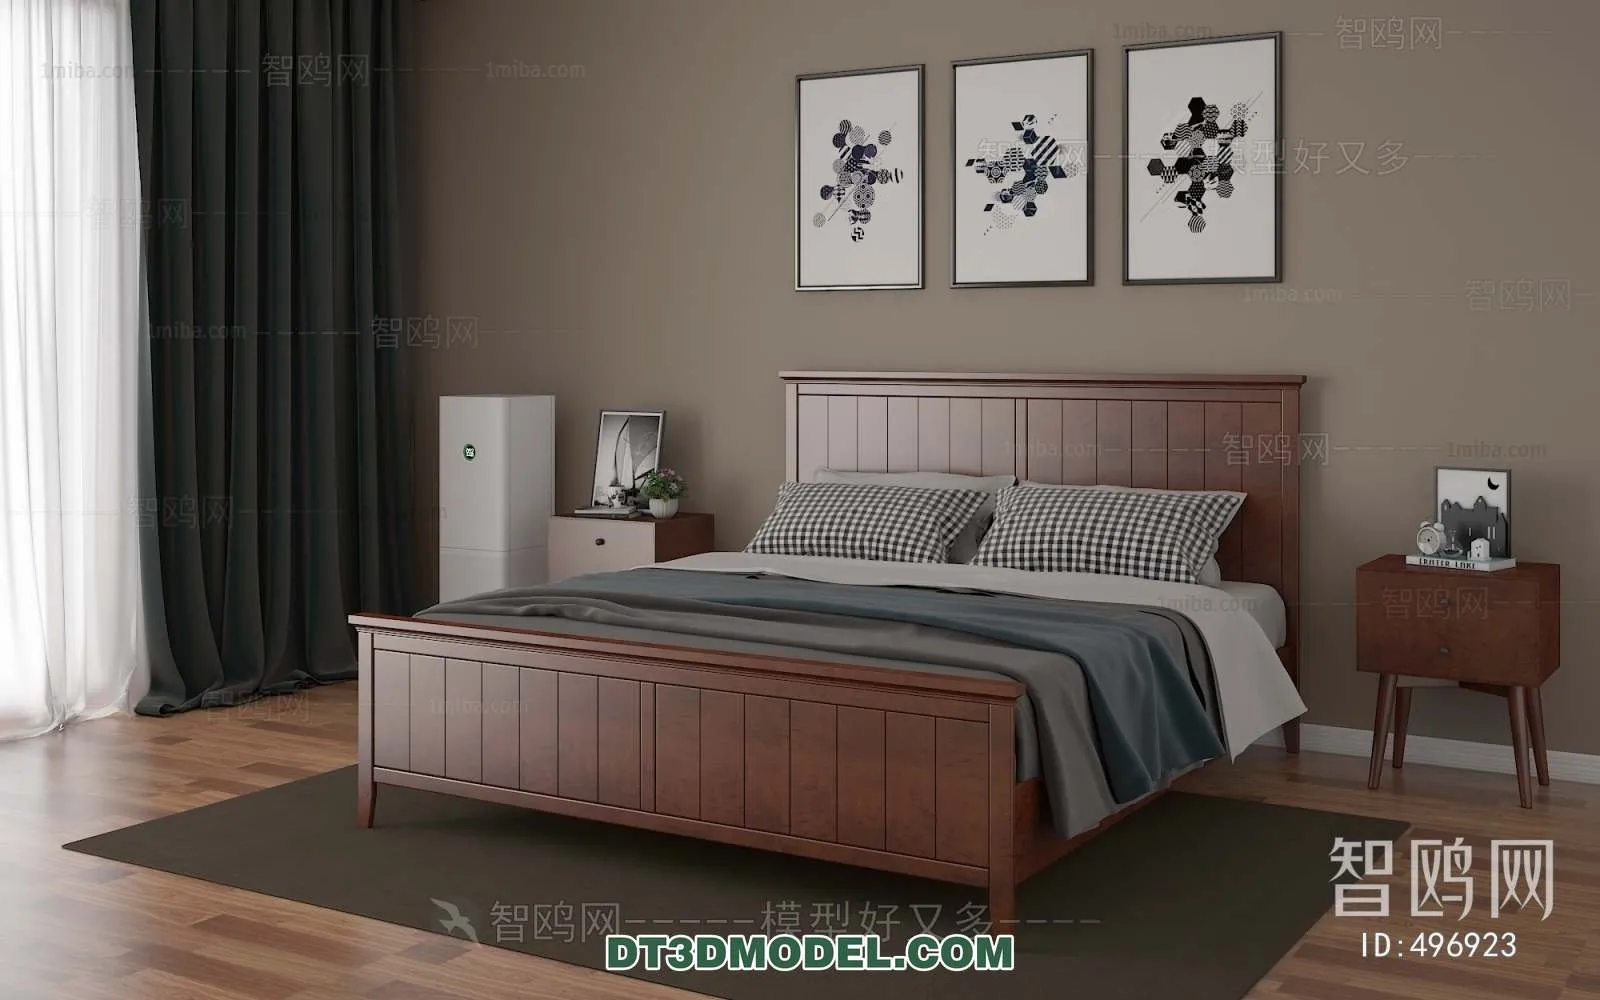 Double Bed 3D Models – 0094